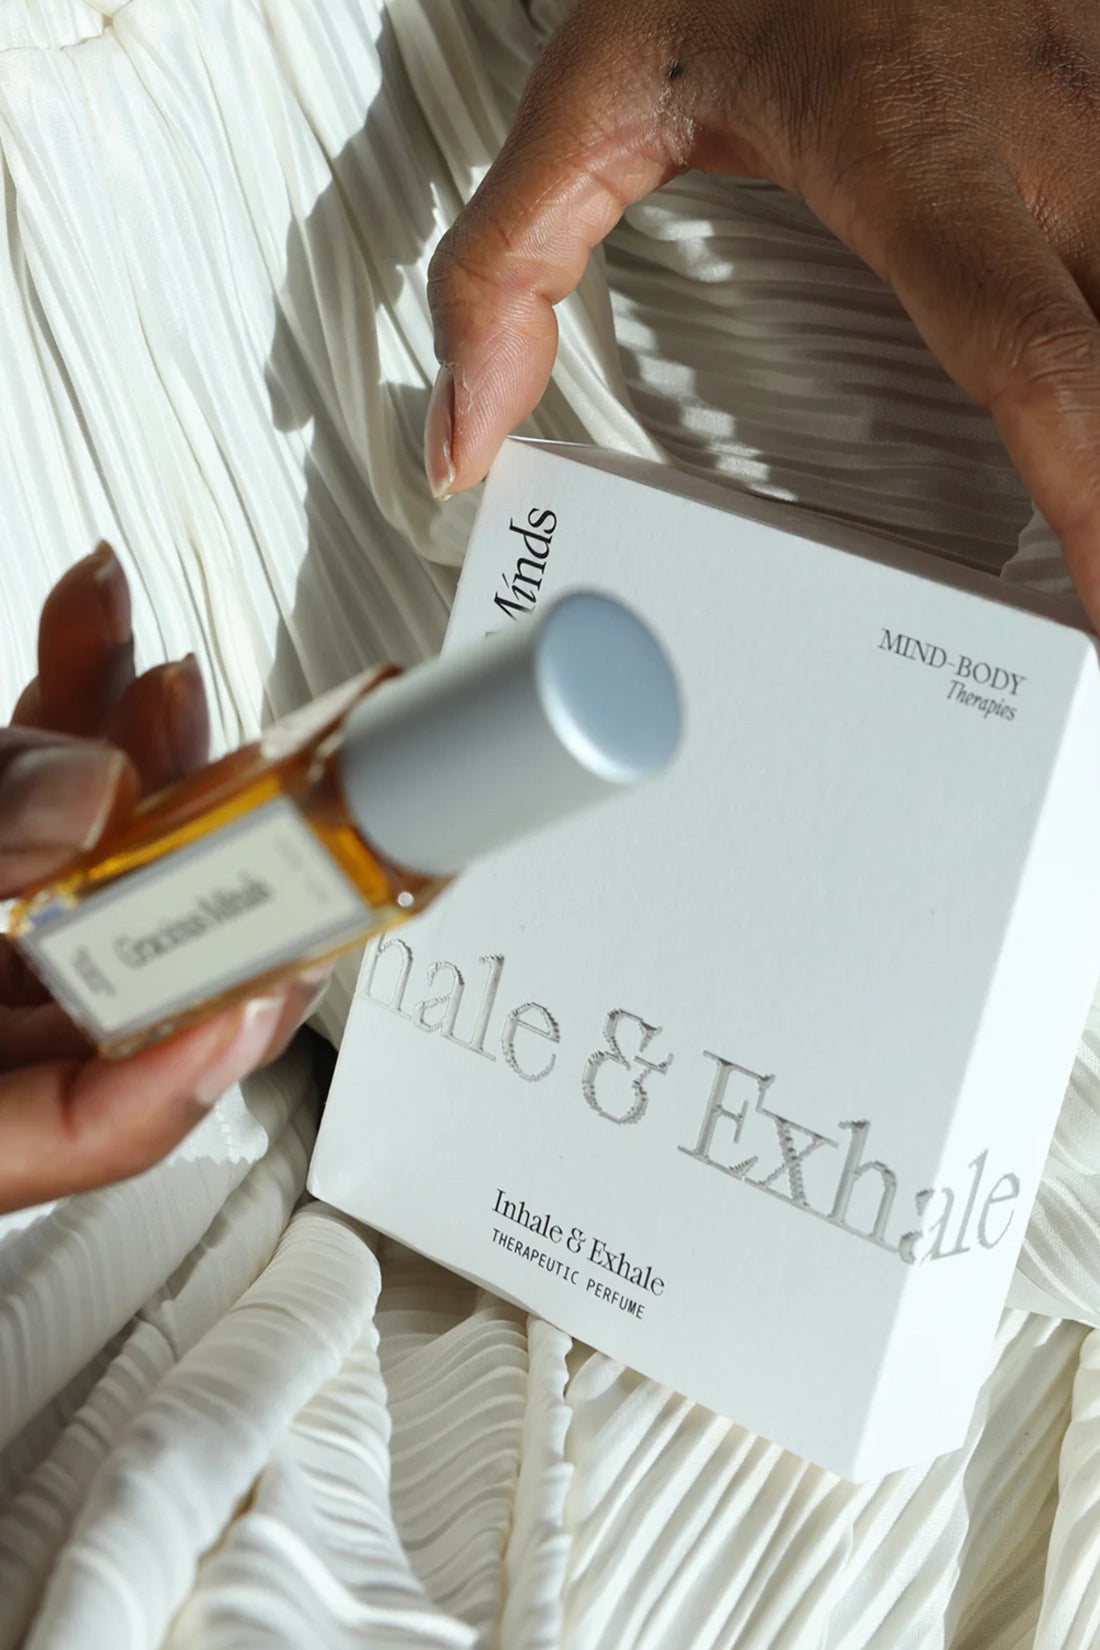 Inhale Exhale Perfume Duo